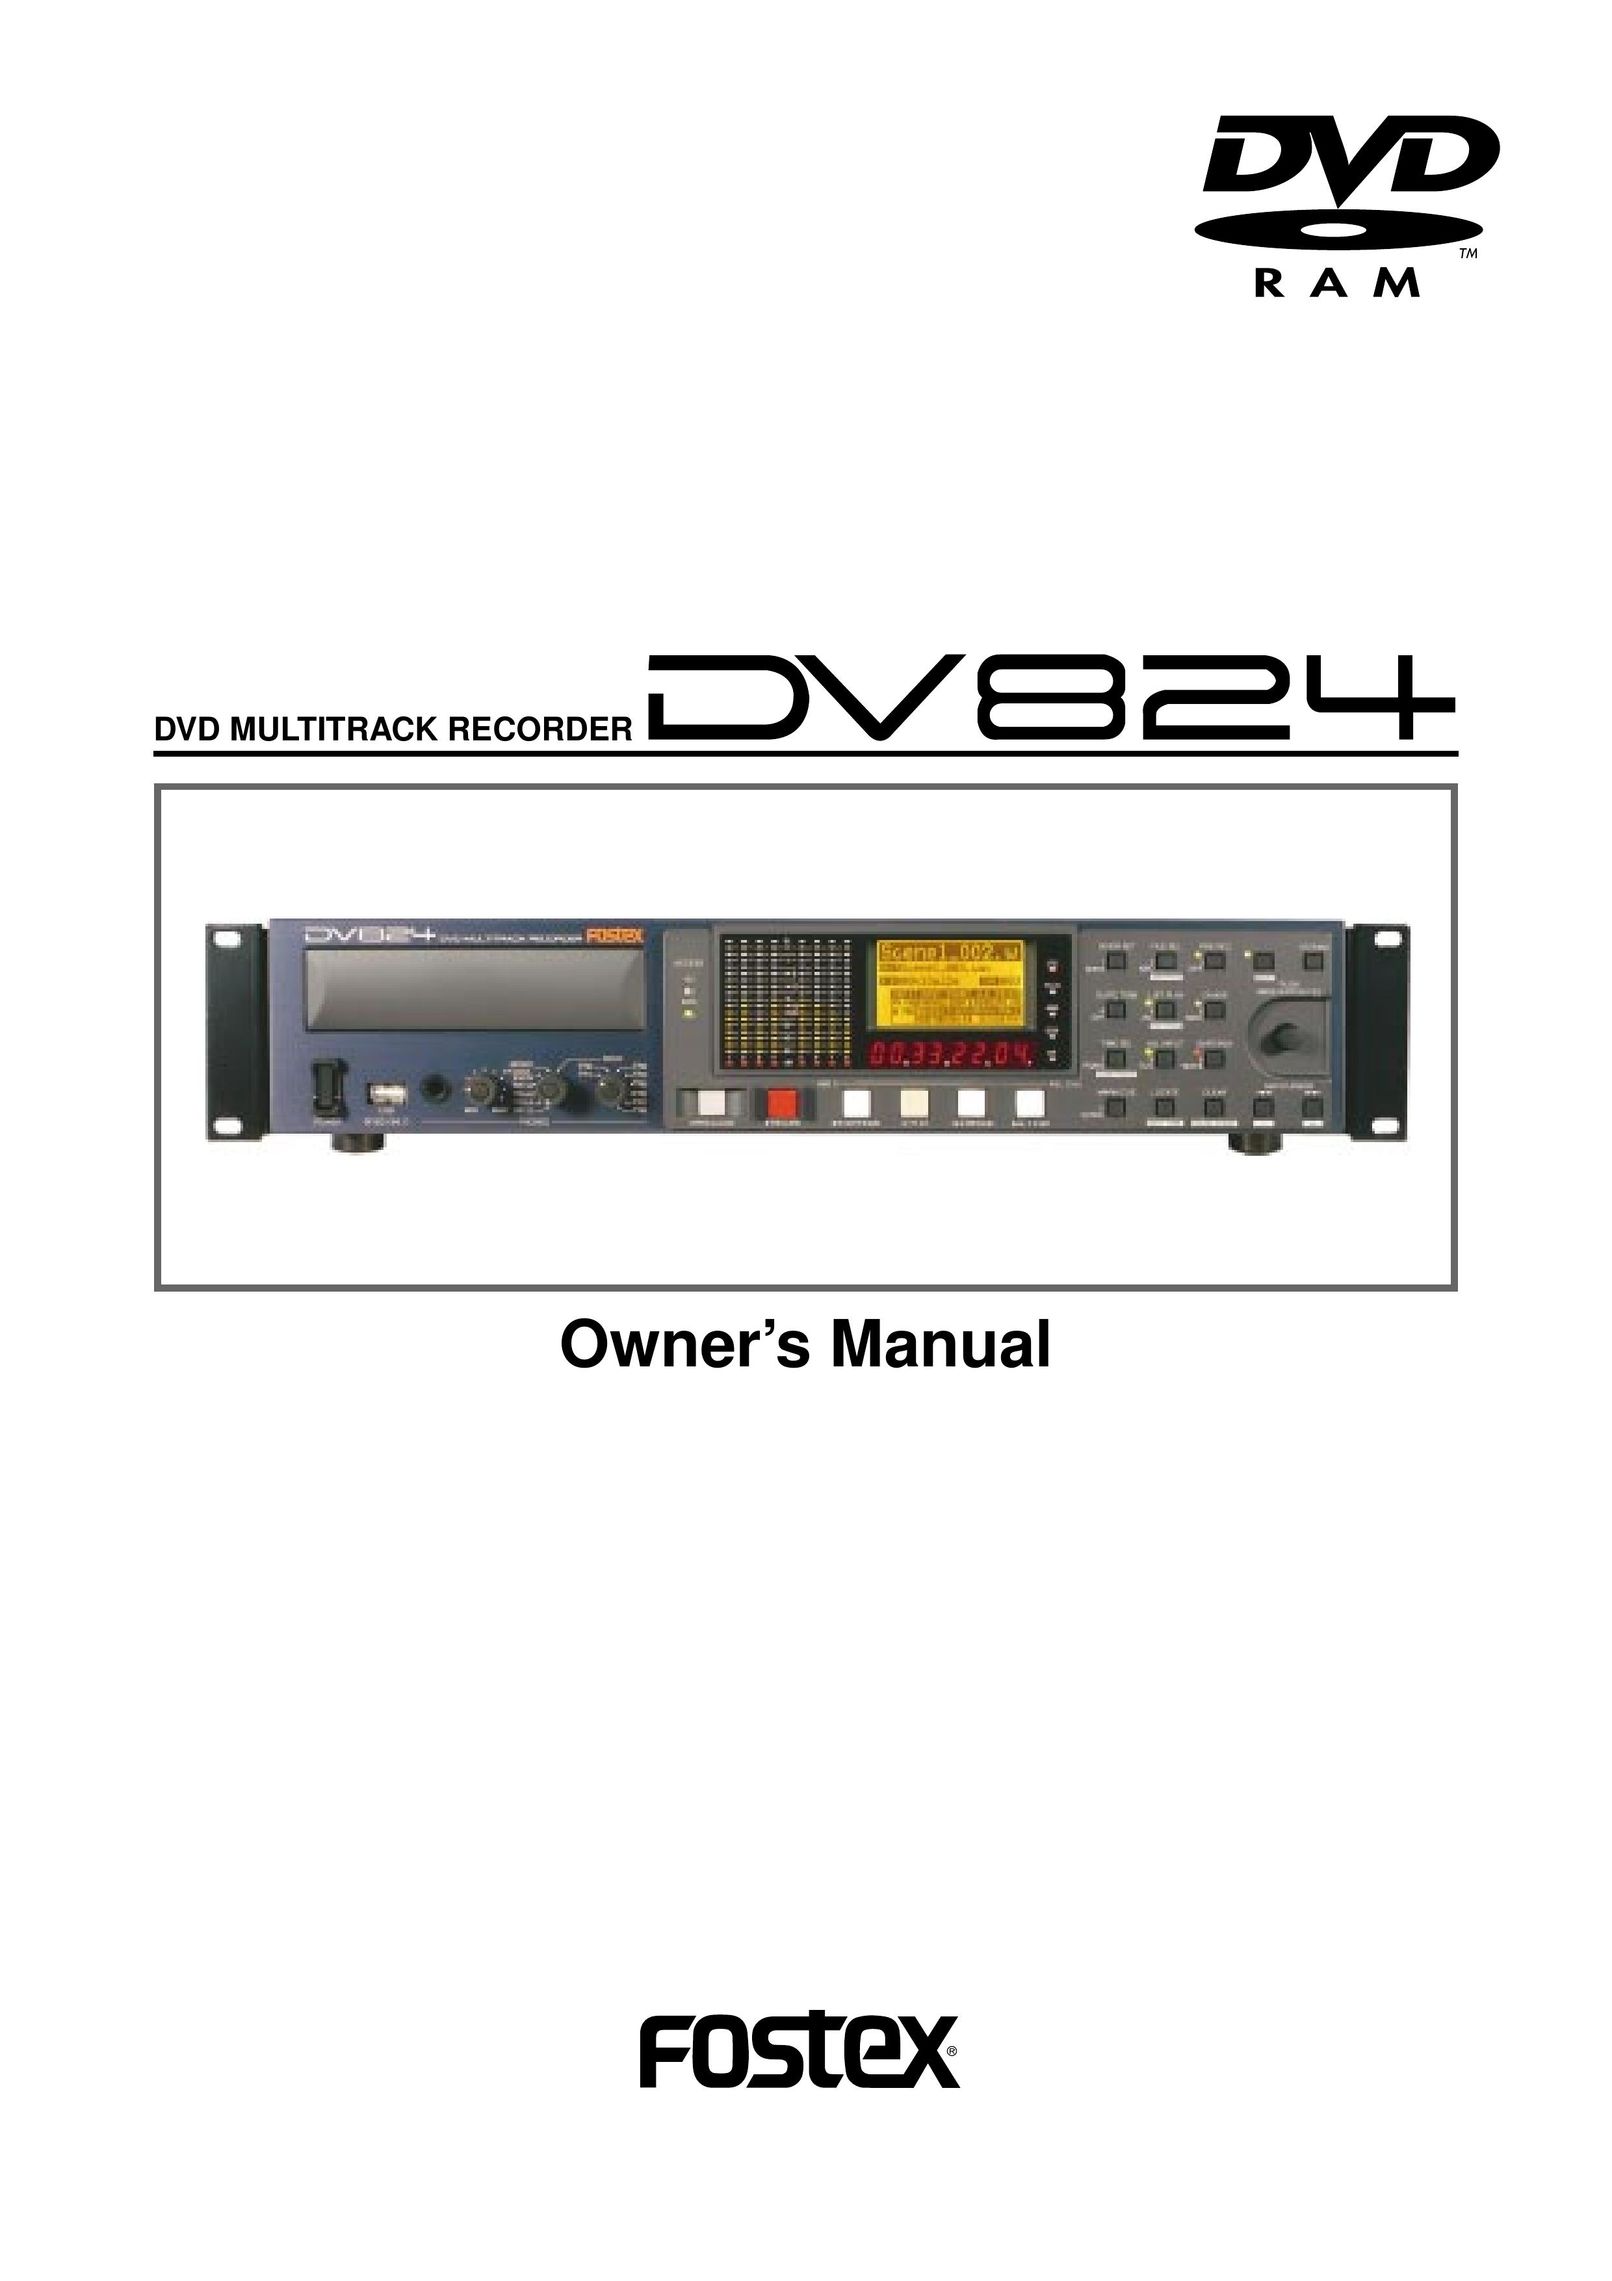 Fostex DV824 DVD Recorder User Manual (Page 1)